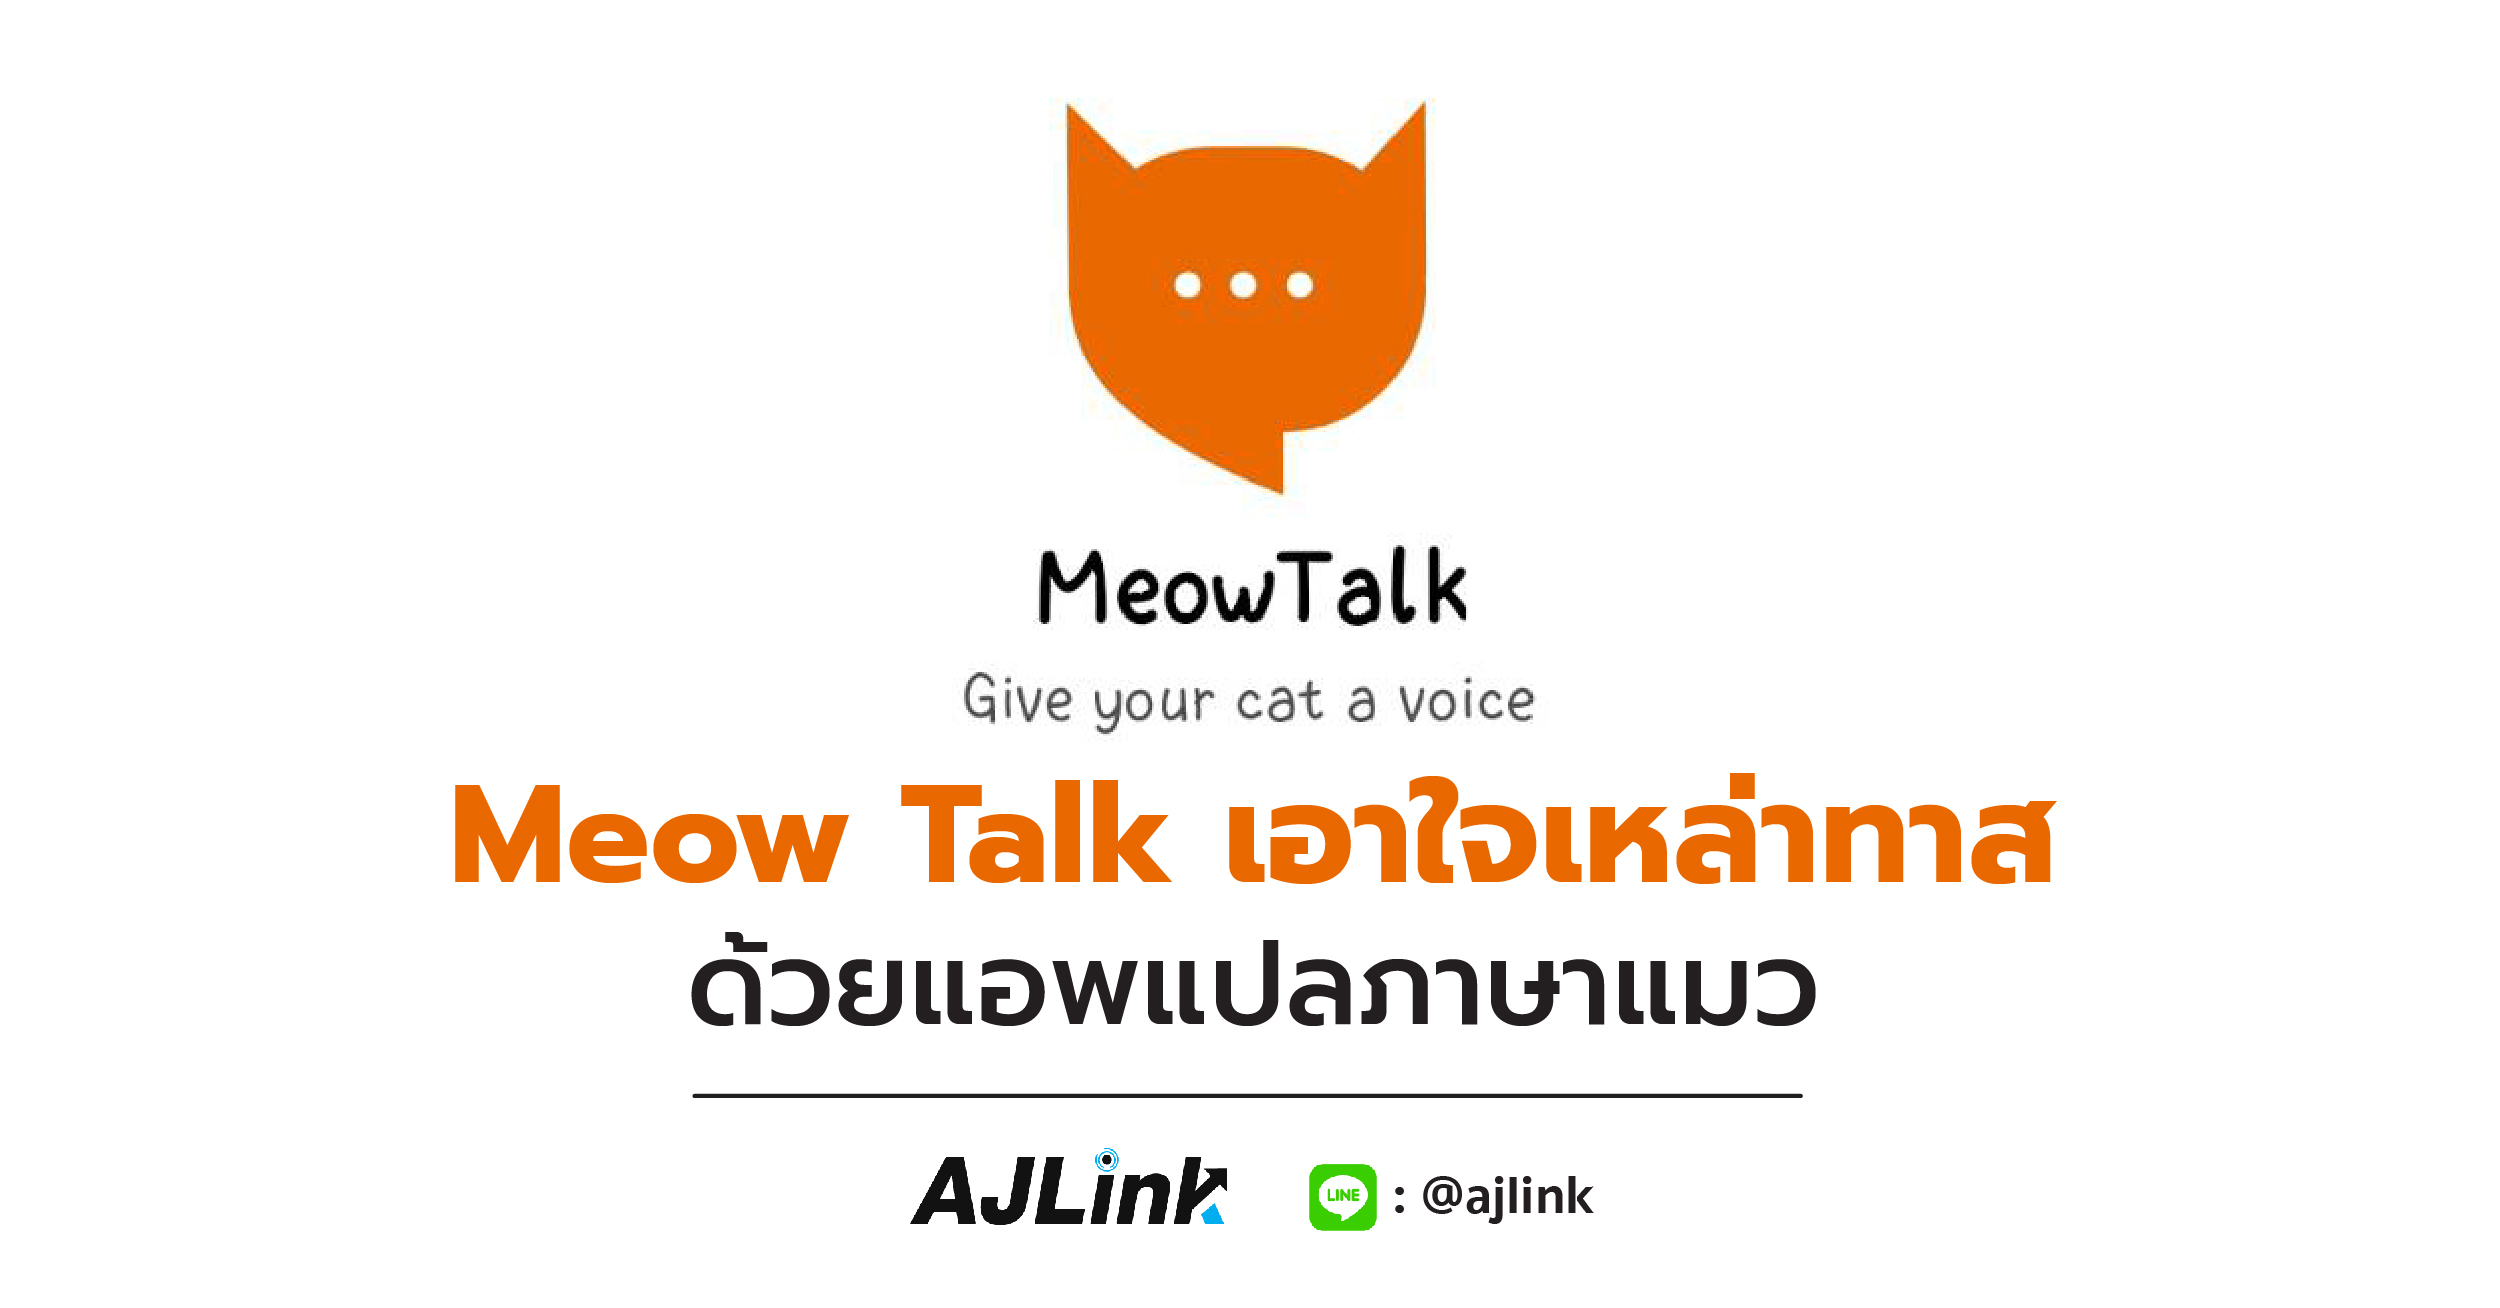 MeowTalk เอาใจเหล่าทาส ด้วยแอพแปลภาษาแมว